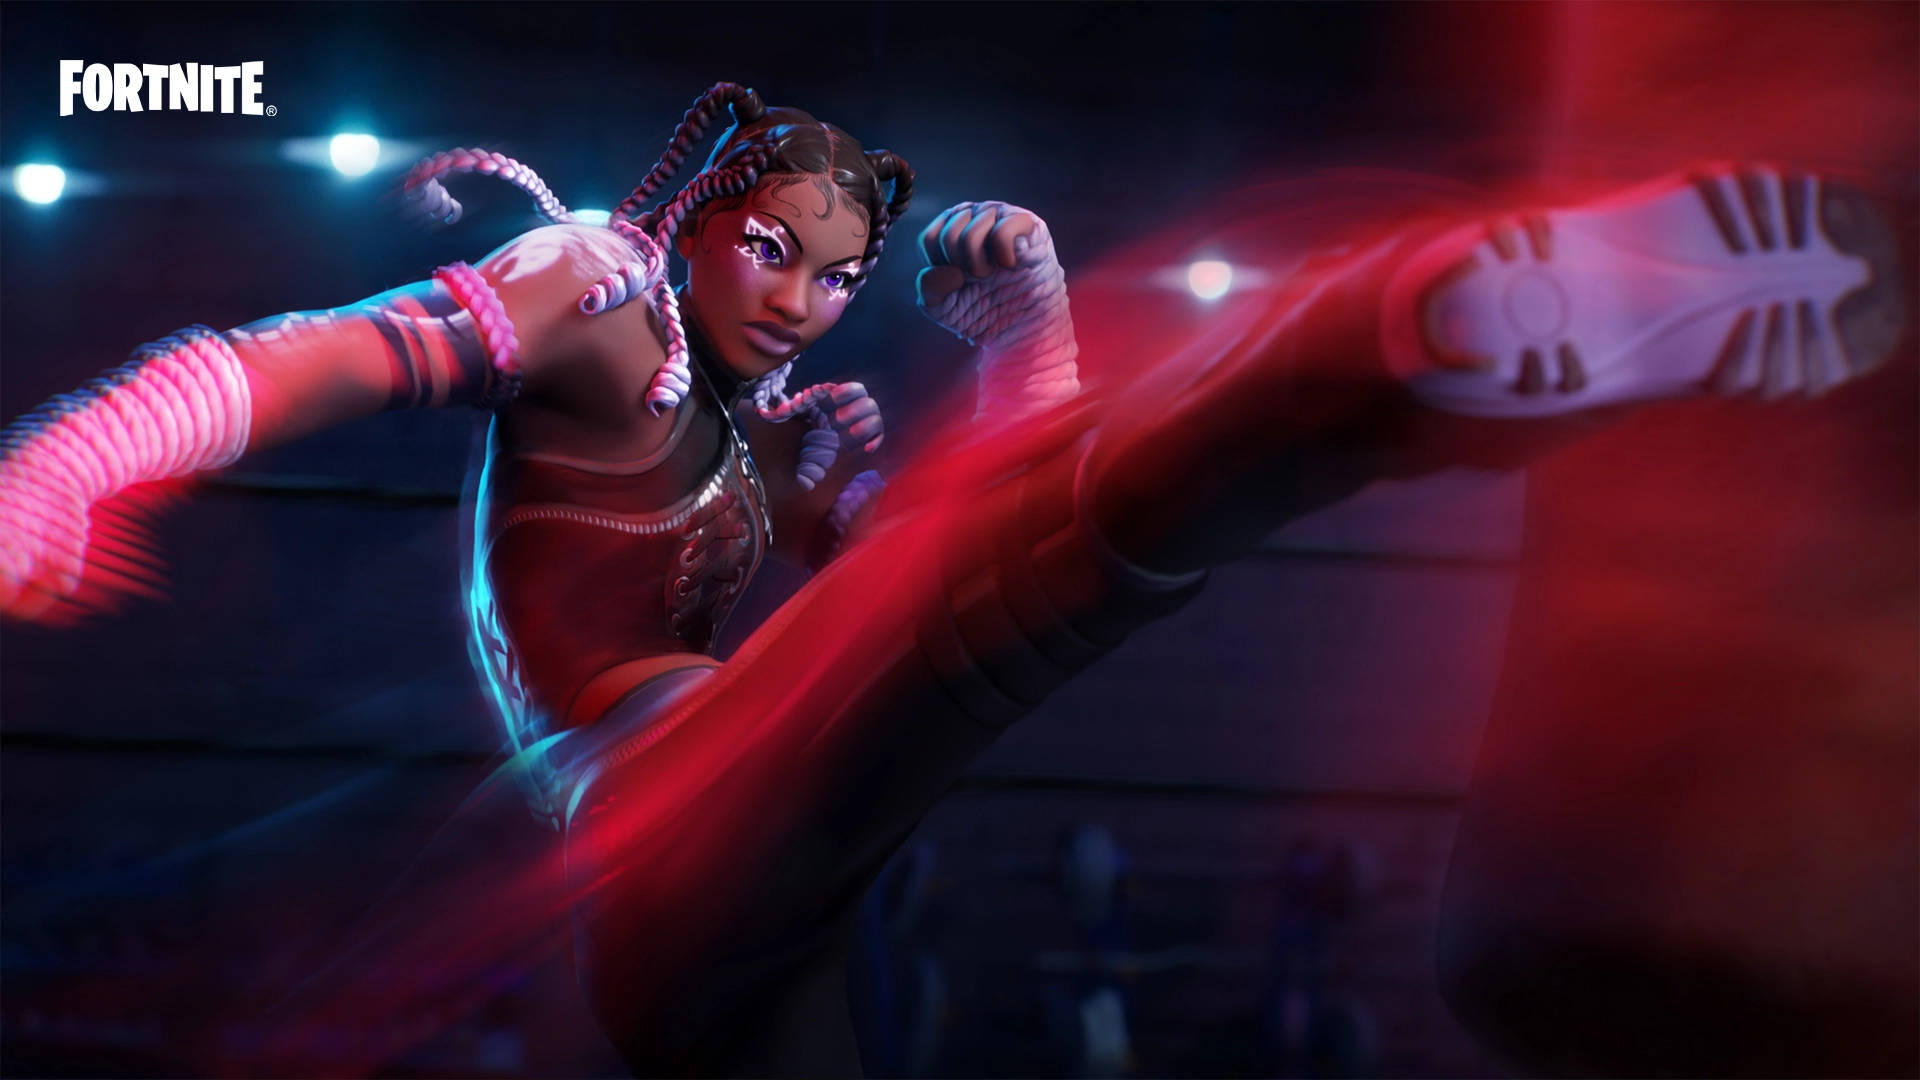 Fortnite - A Female Fighter In A Red Light Wallpaper